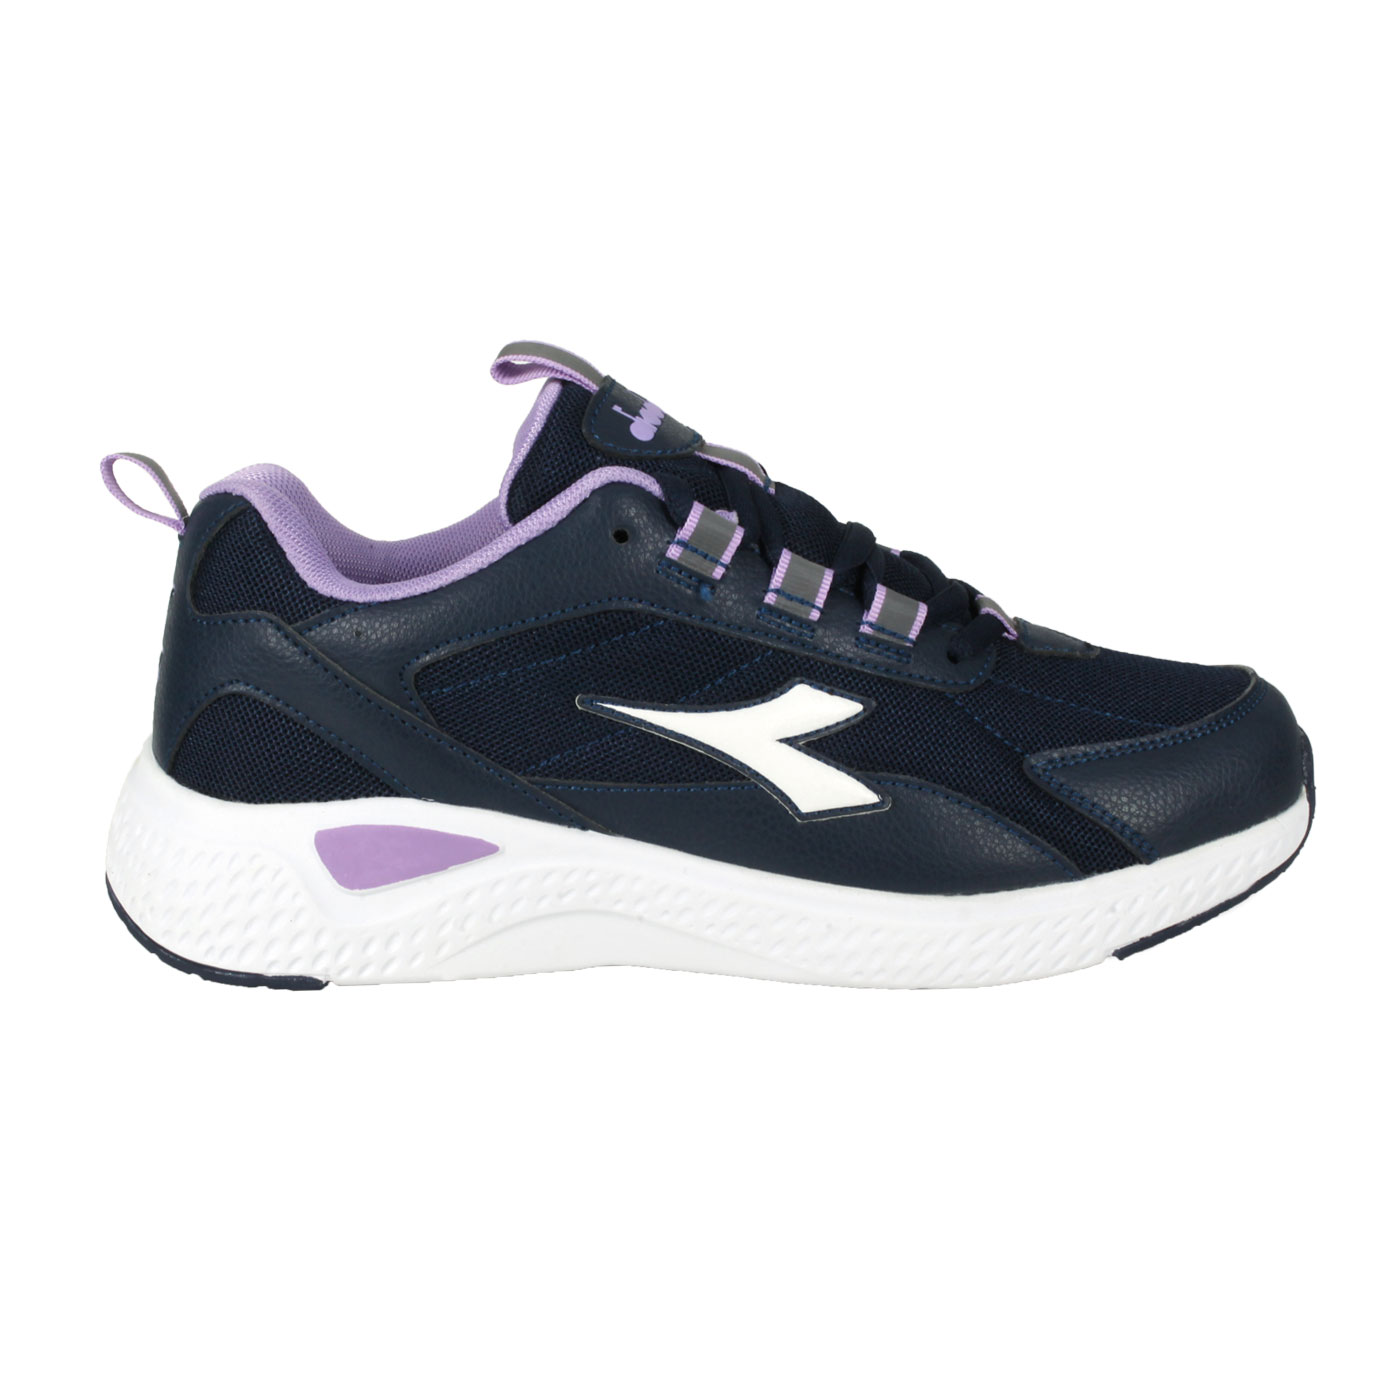 DIADORA 女款專業輕量慢跑鞋 DA33622 - 丈青白紫